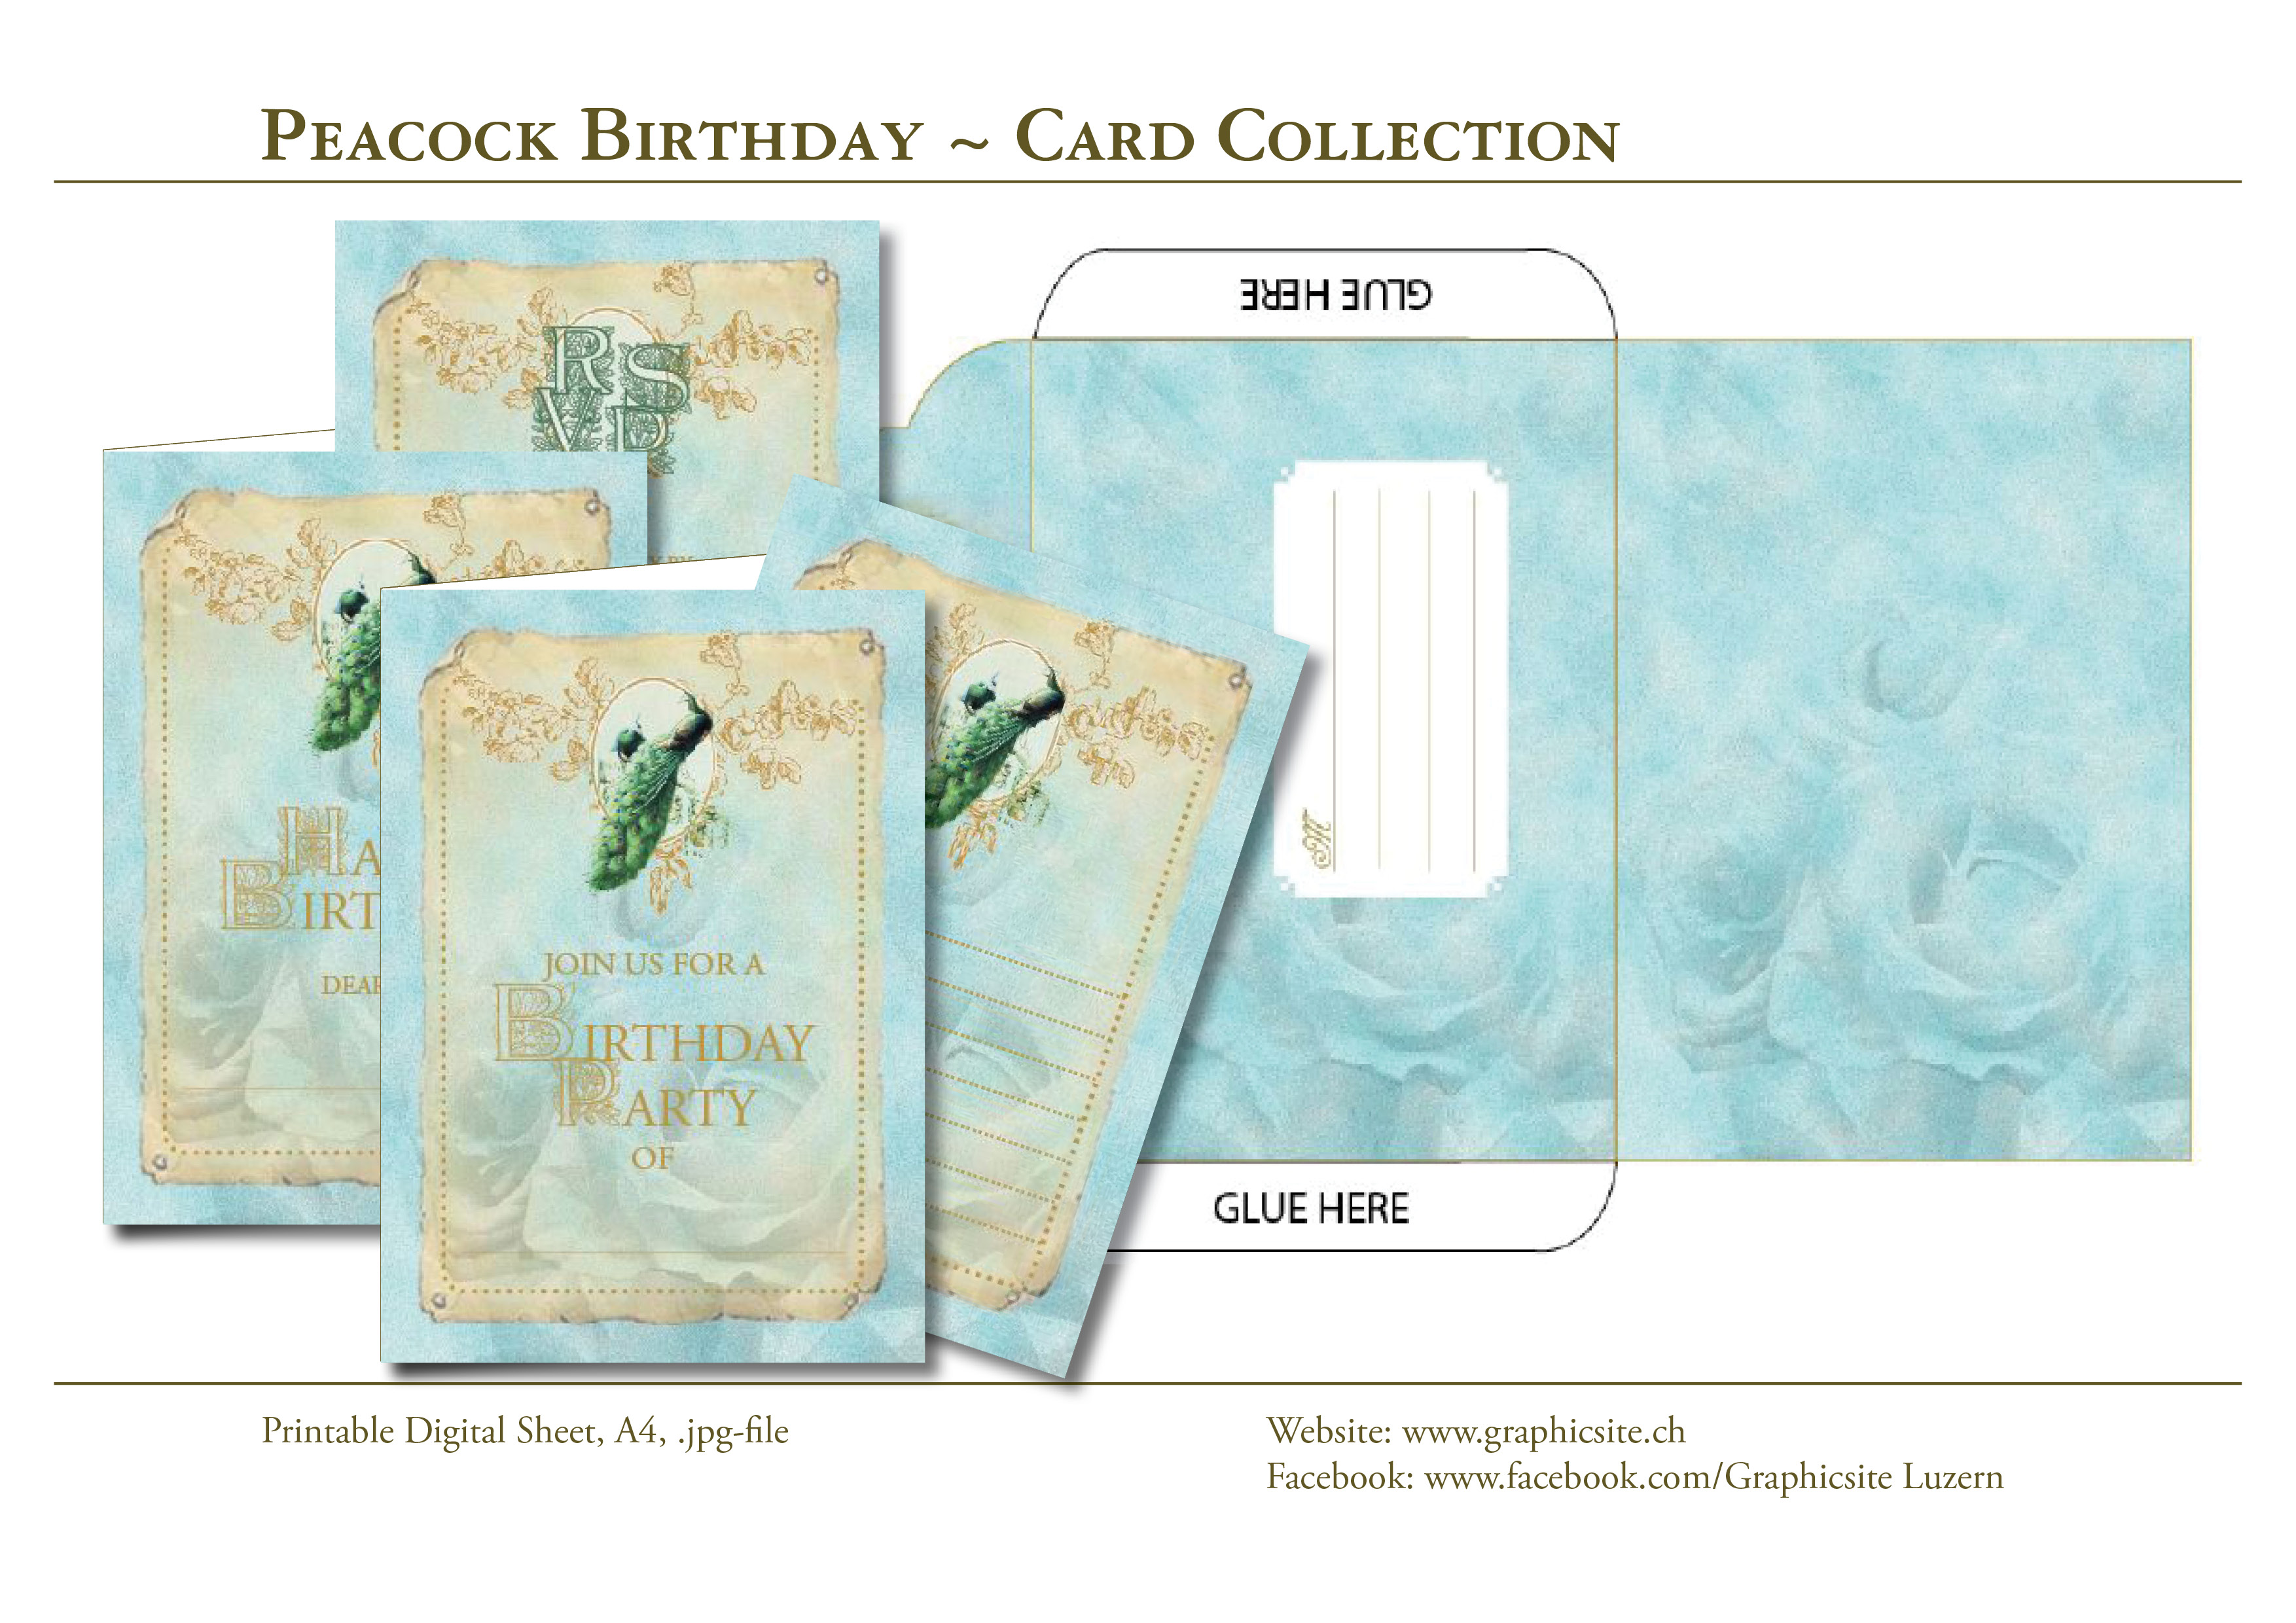 Printable Digital Sheets - Collection DIN A - Birthday - Peacock Birthday - Graphic Design Luzern, Schweiz